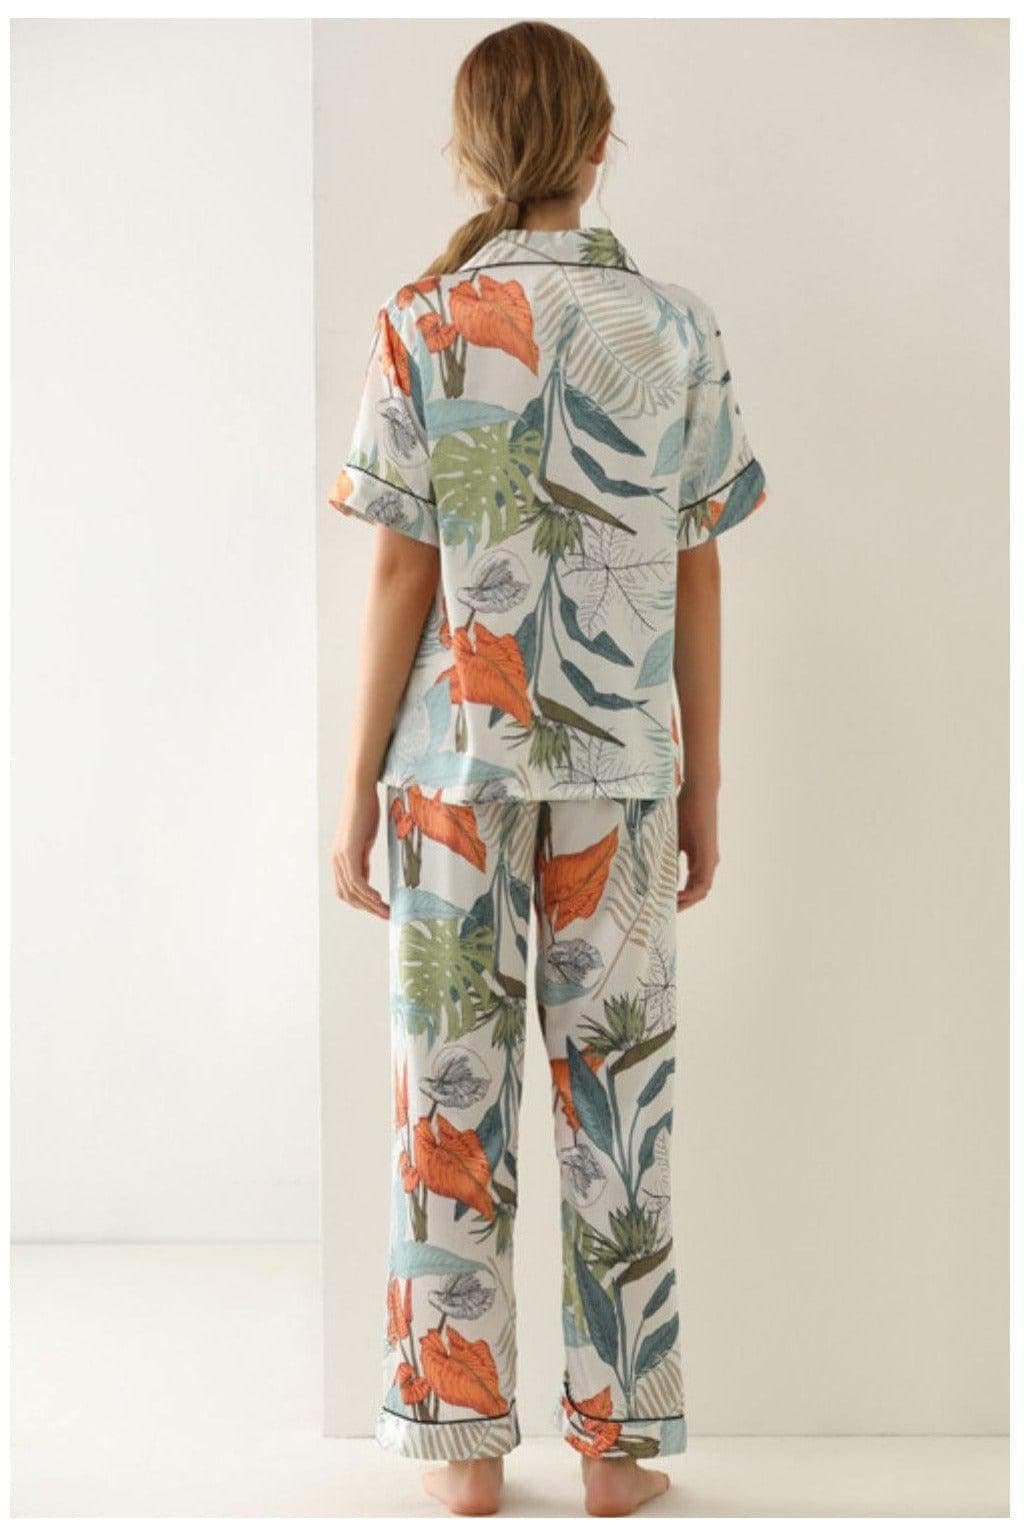 Botanical Print Button-Up Top and Pants Pajama Set - SwagglyLife Home & Fashion